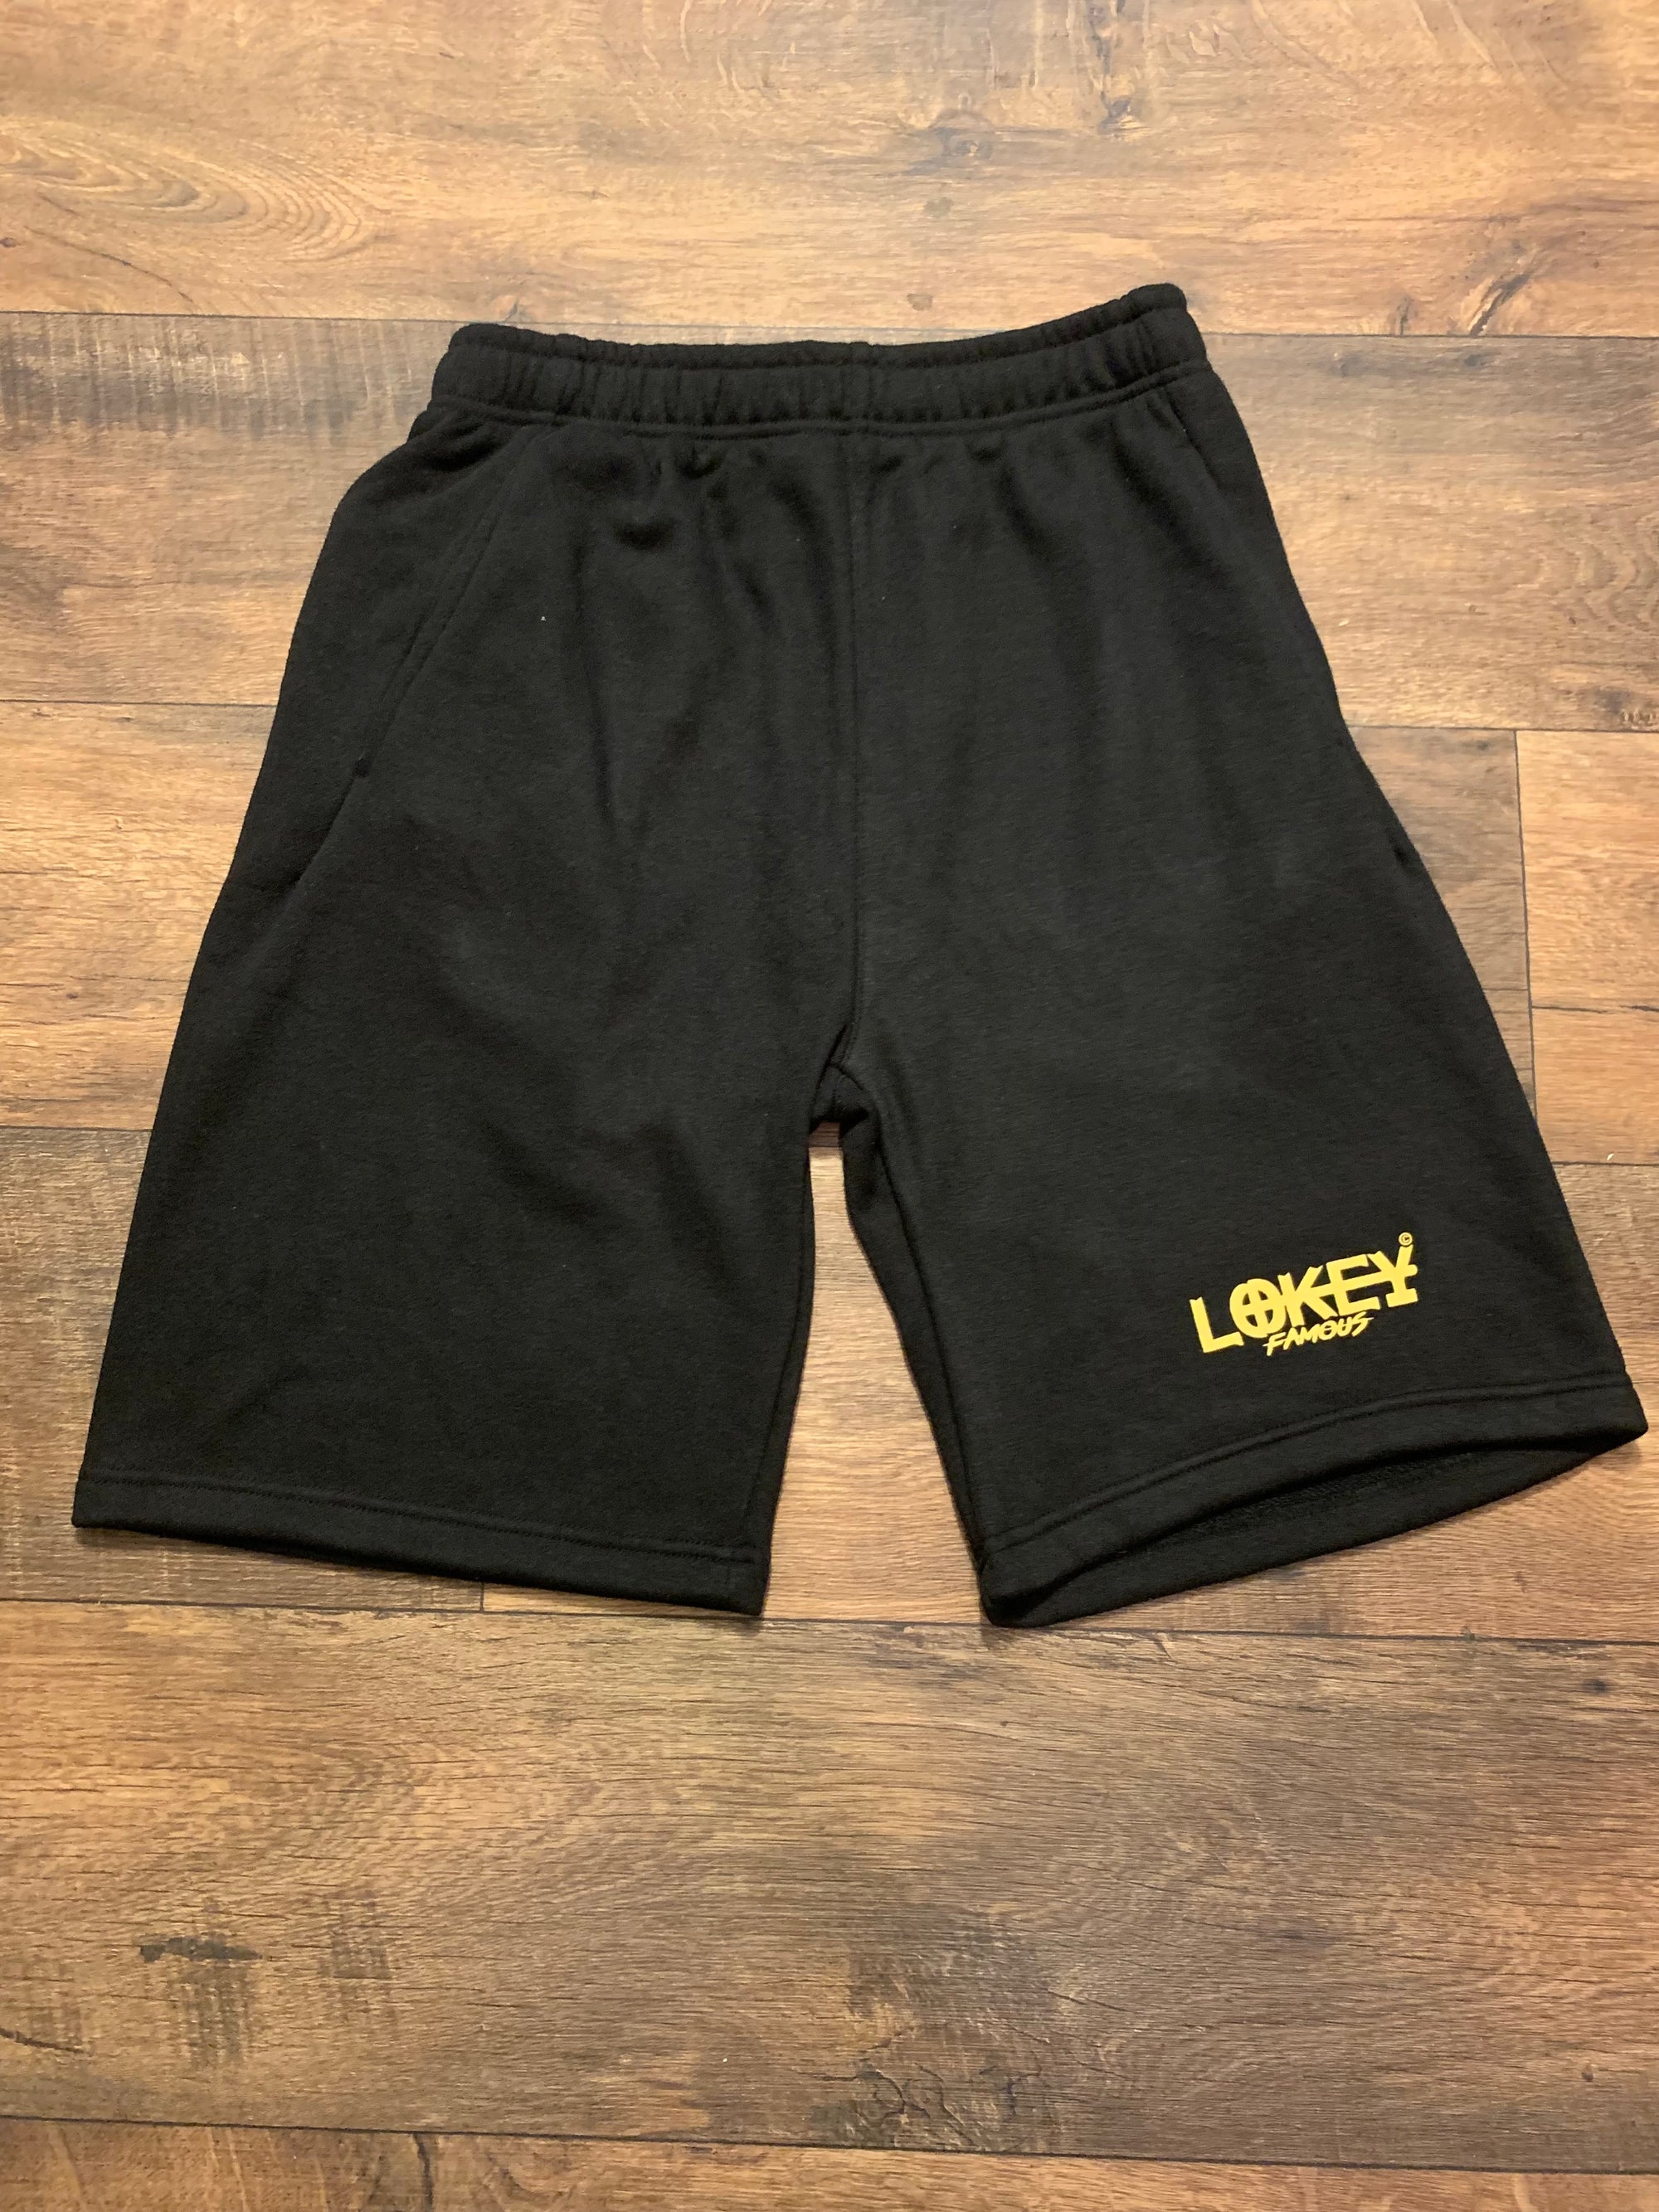 LF black shorts w/Golden yellow logo